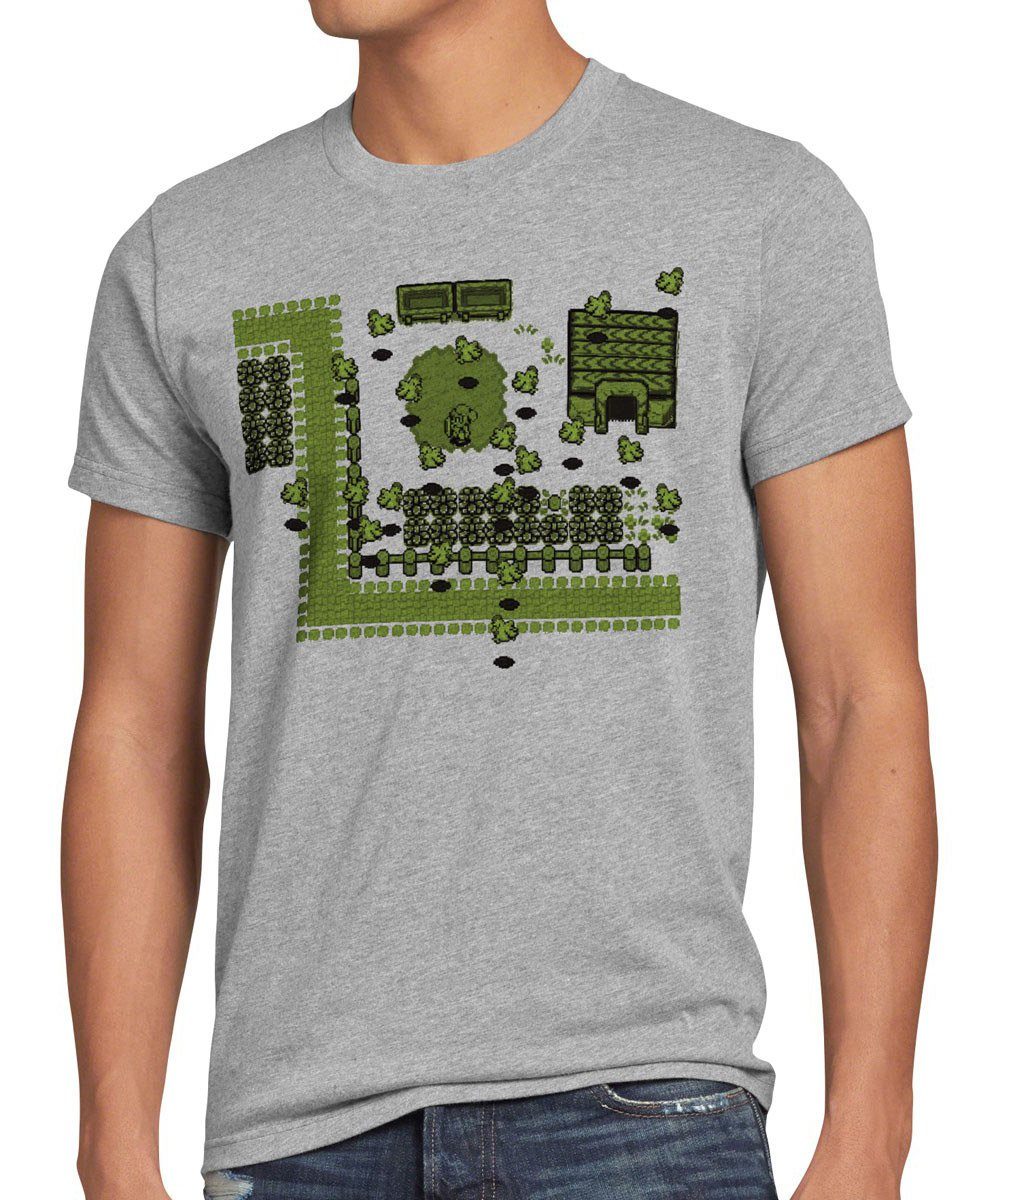 style3 Print-Shirt Herren T-Shirt Link Retro Gamer zelda gameboy Kult Fan Pixel Spiel Game switch grau meliert